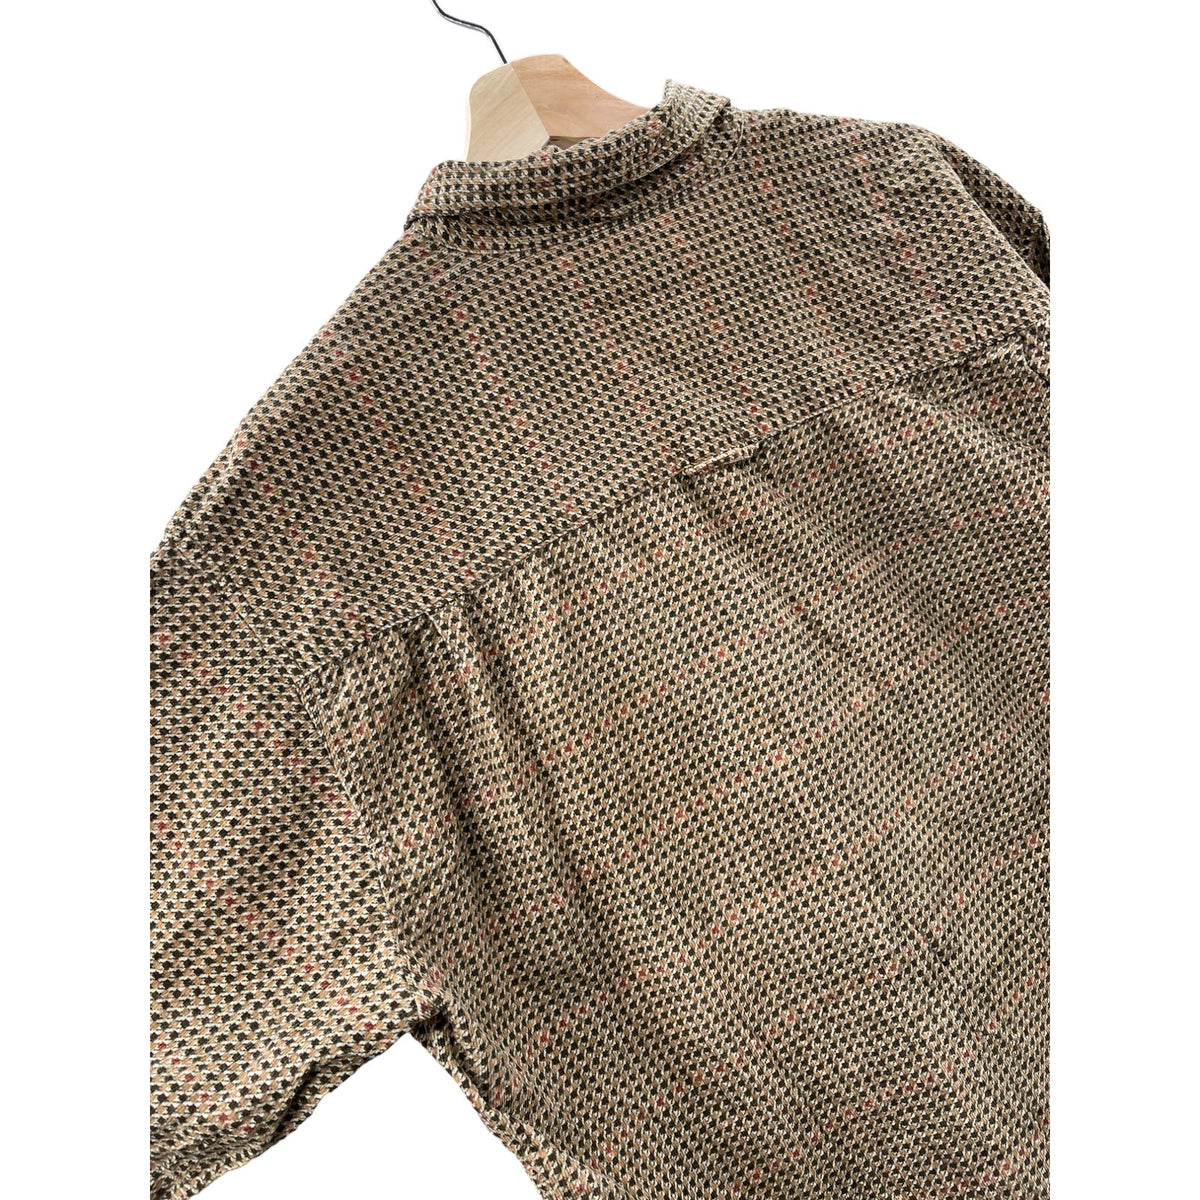 Vintage 1990's Oobe Brown Microcheck Corduroy Button Down Shirt